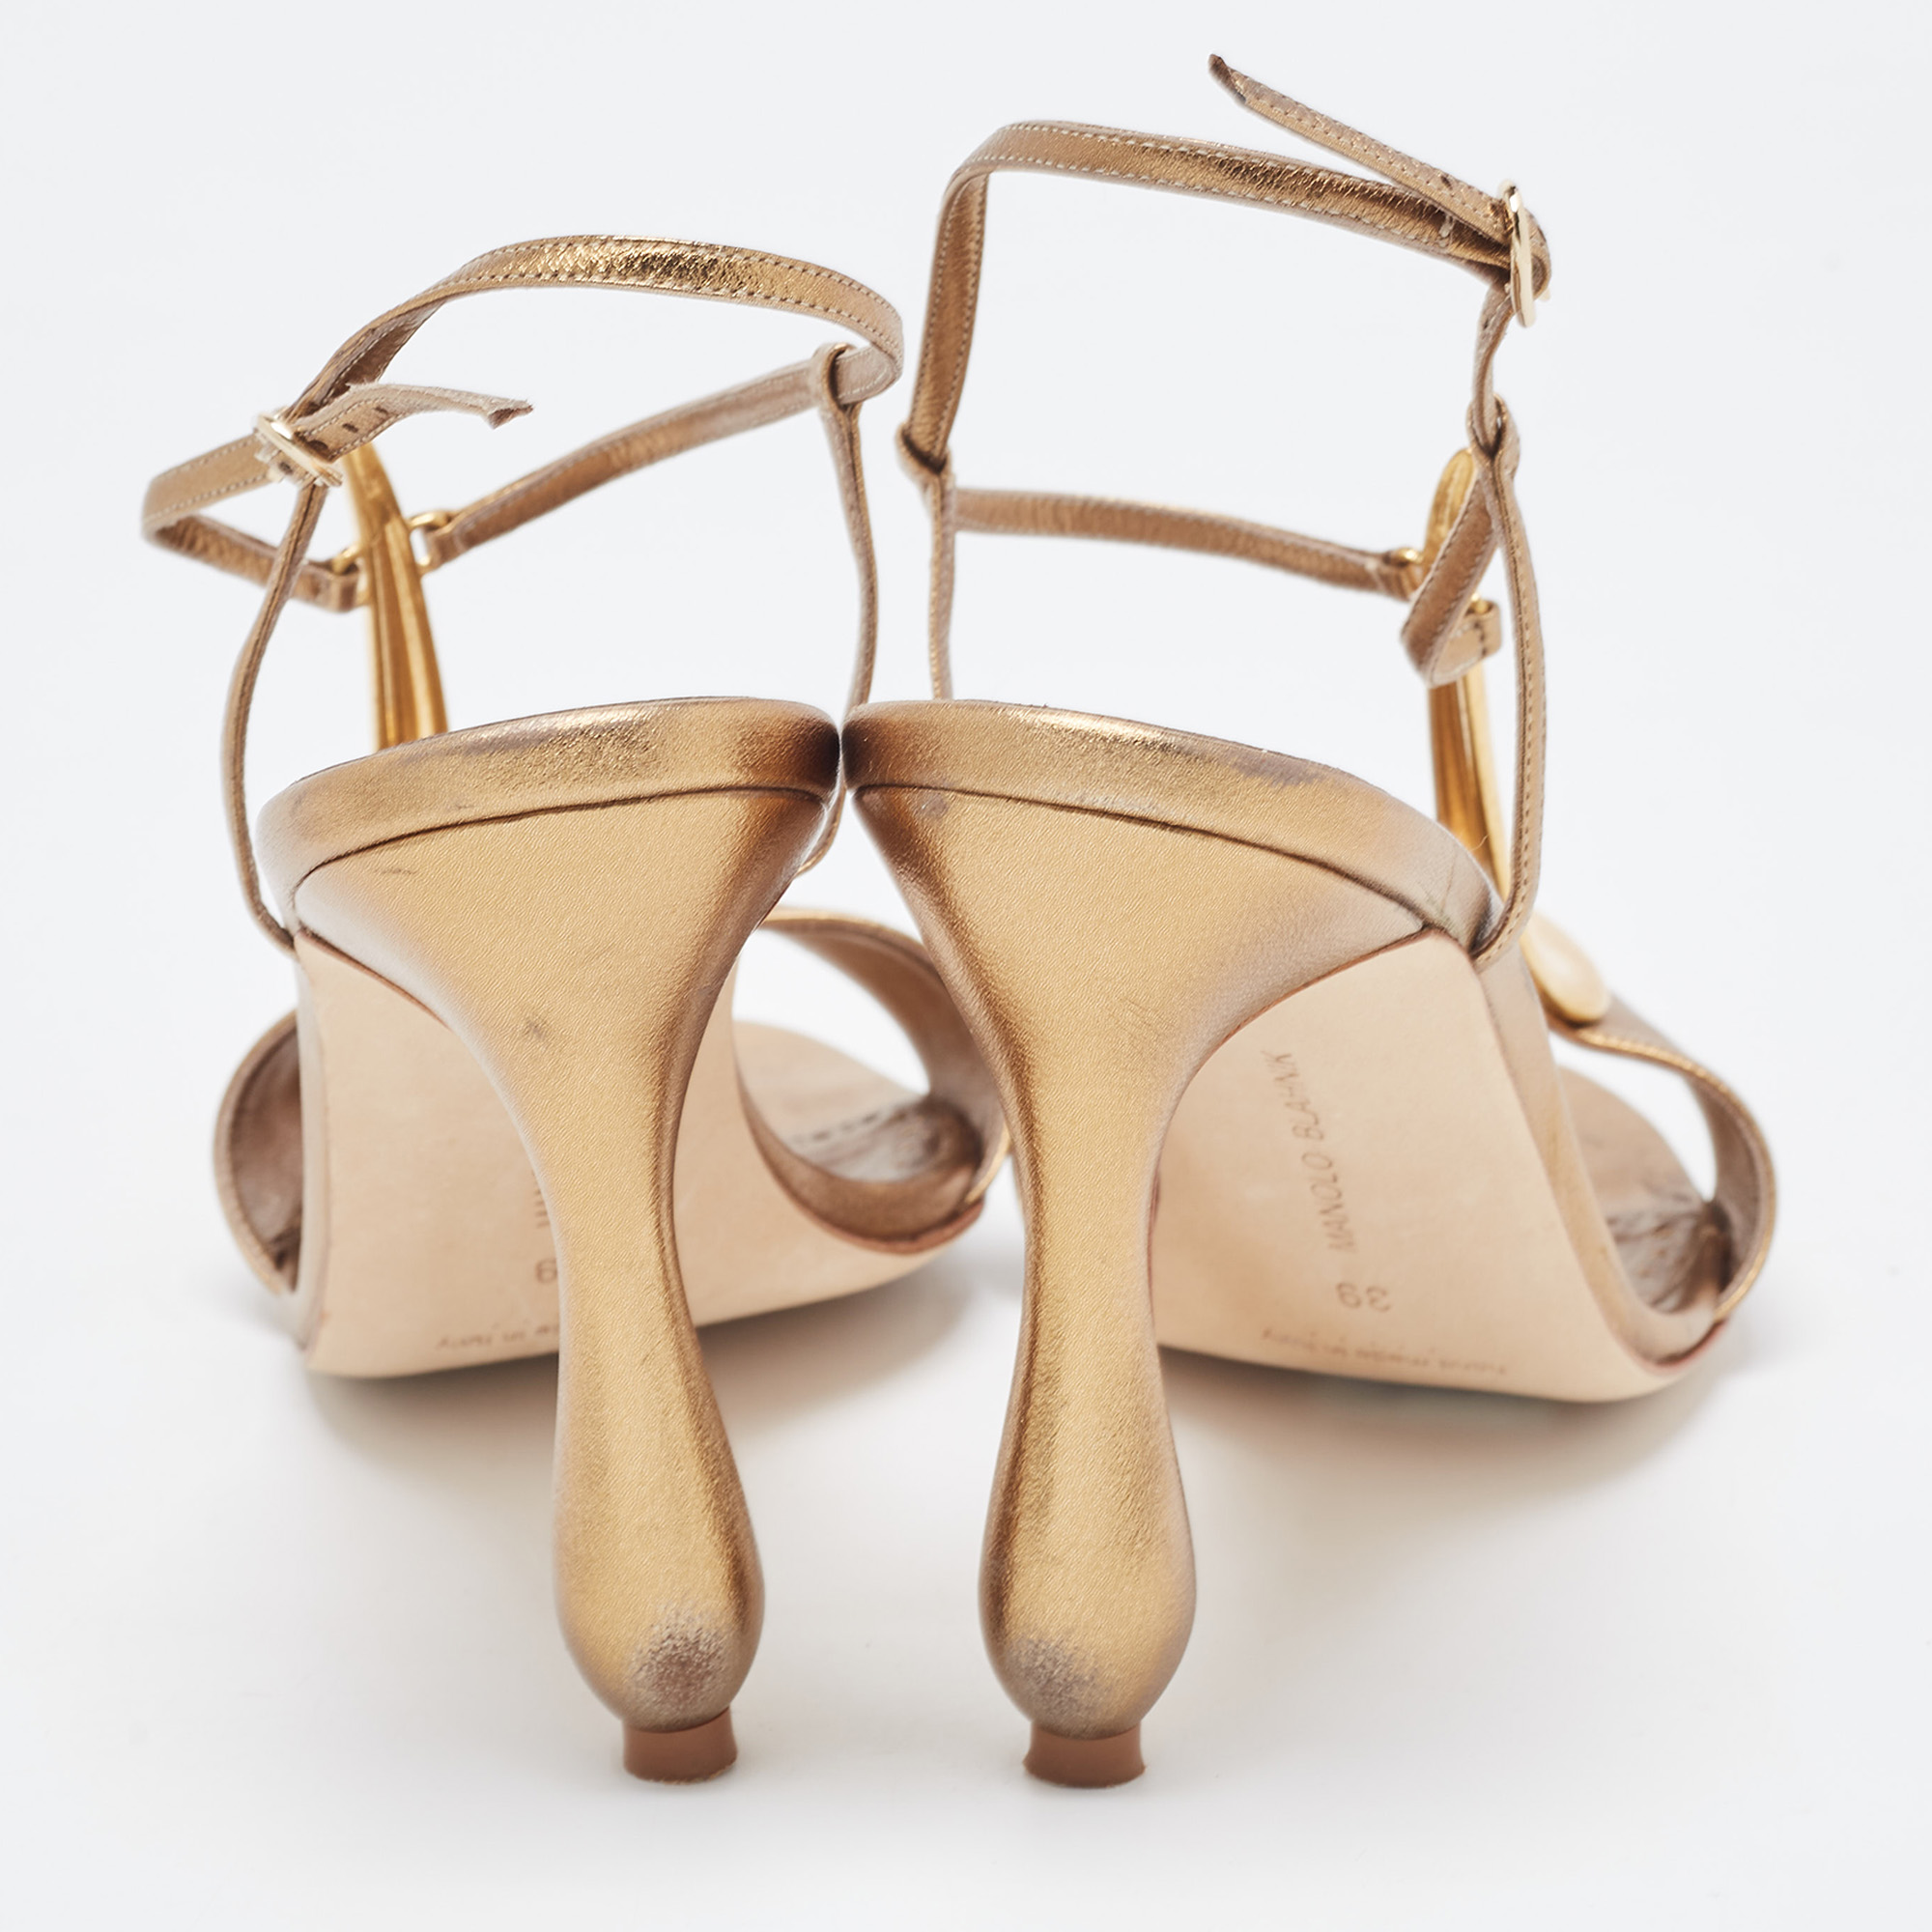 Manolo Blahnik Metallic Leather Ankle Strap Sandals Size 39